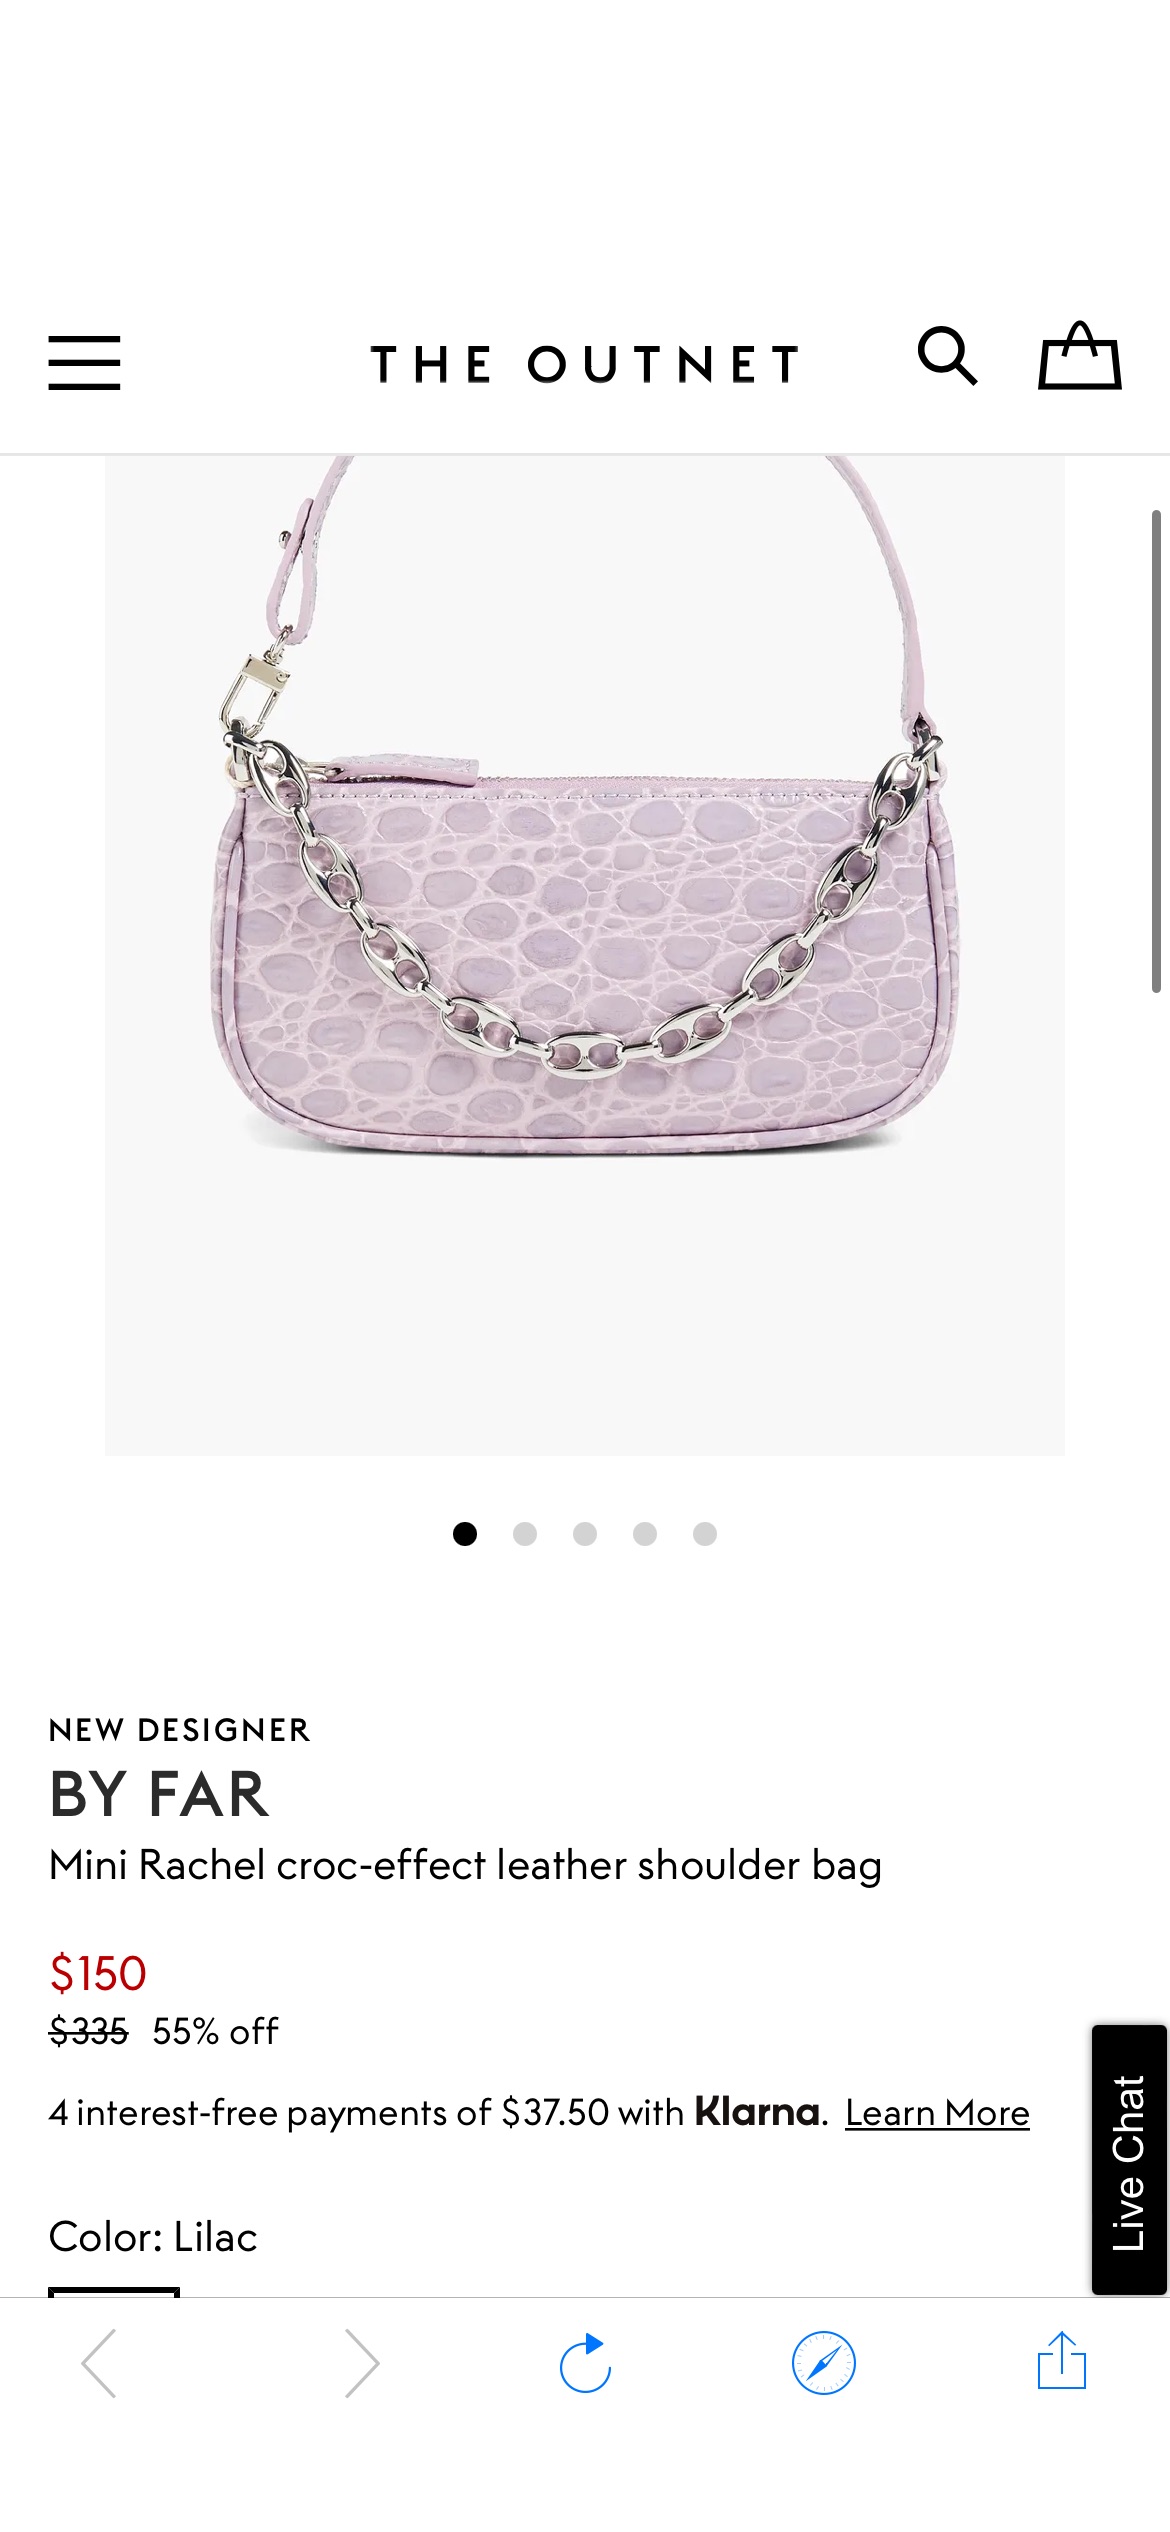 Lilac Mini Rachel croc-effect leather shoulder bag | BY FAR | THE OUTNET